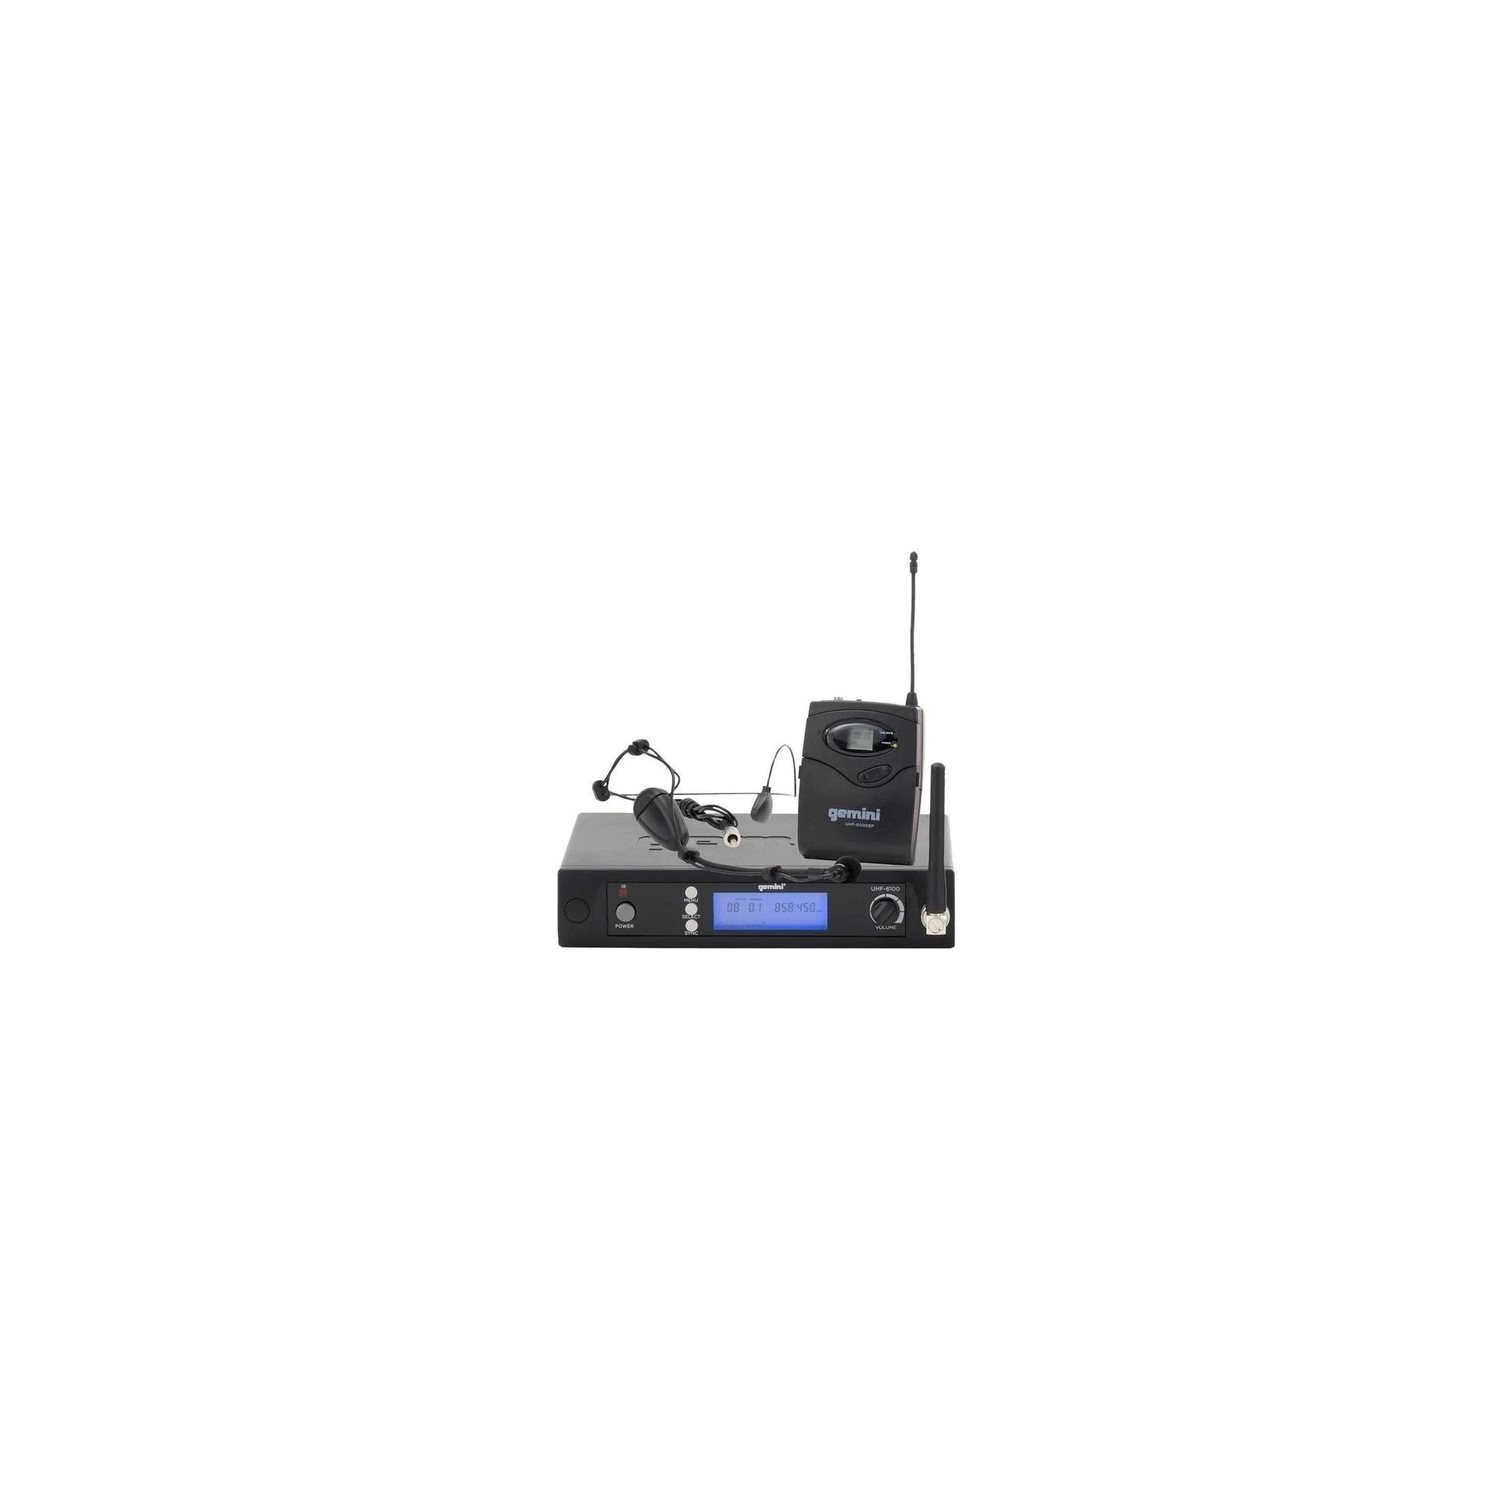 GEMINI - UHF-6100HL-R2 - Single Channel Wireless Headset Microphone System